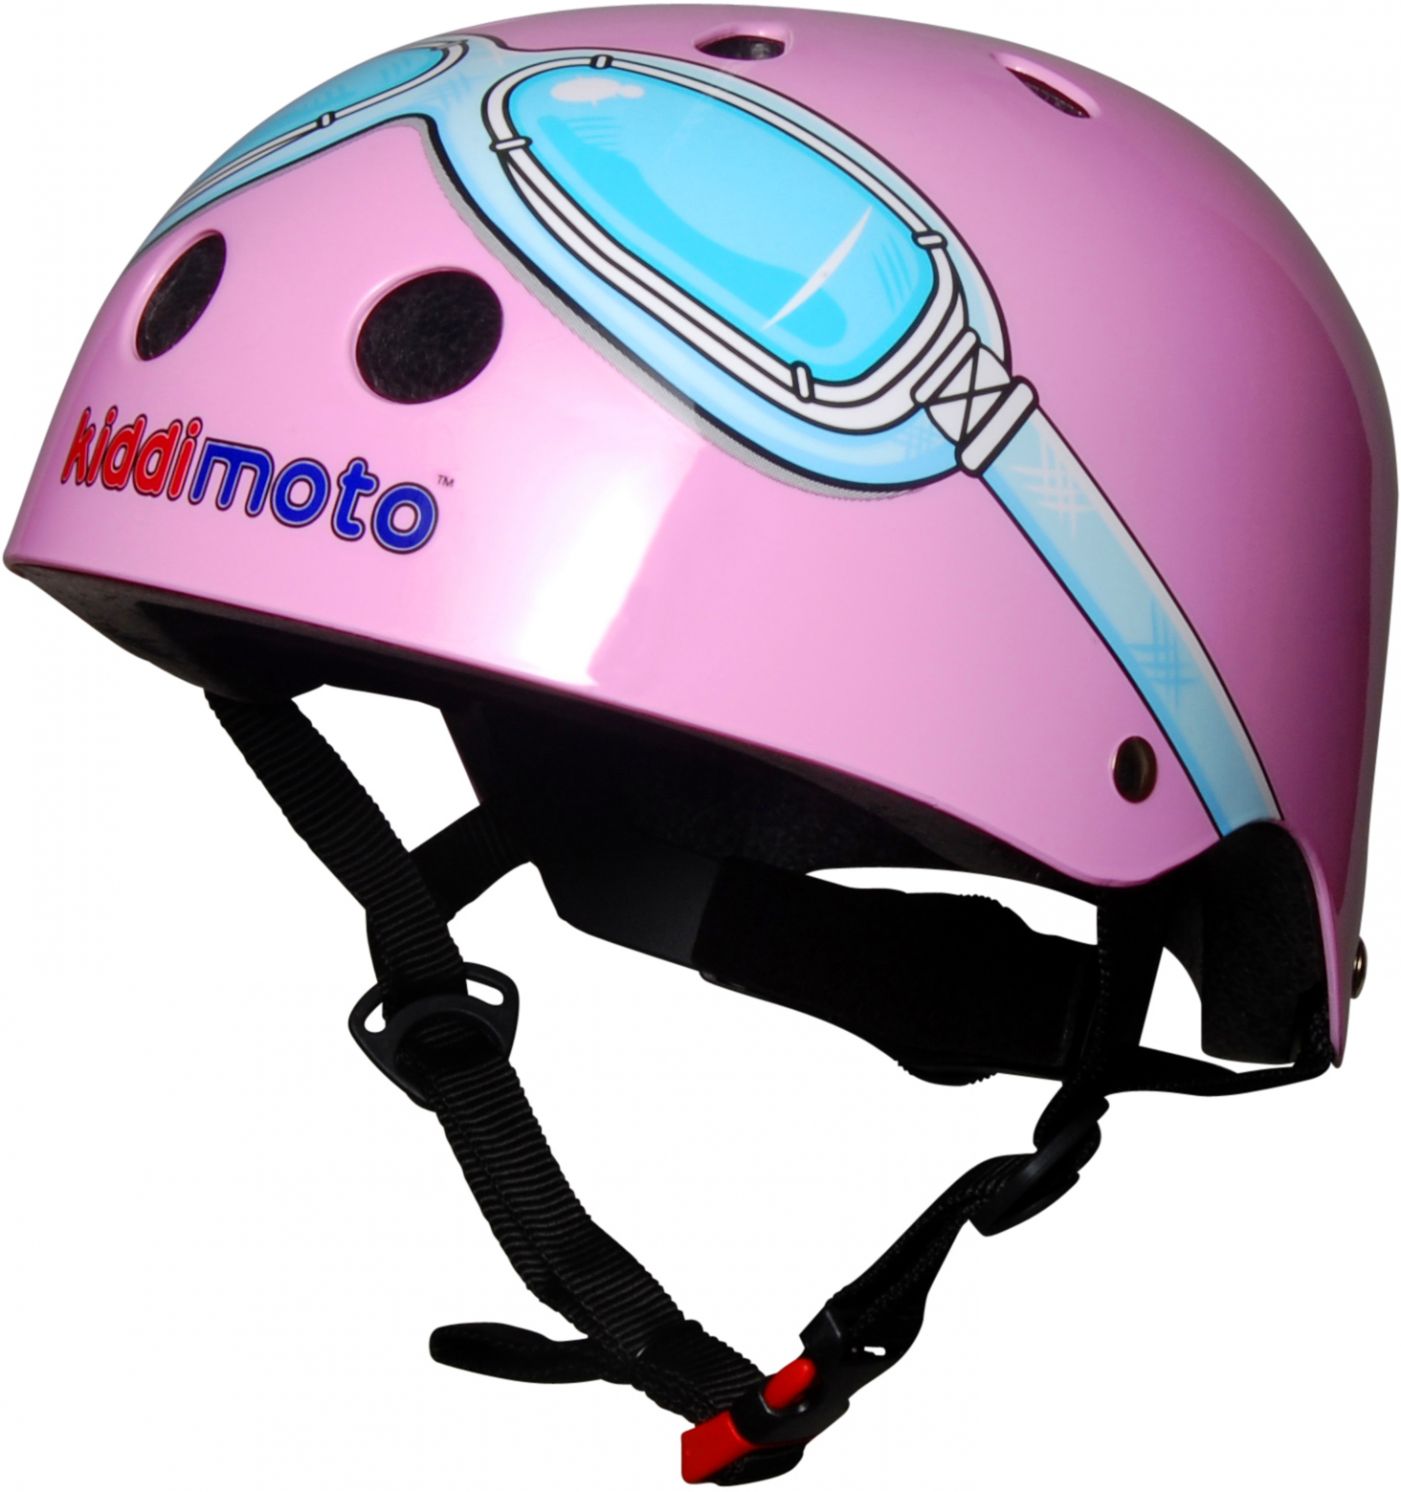 Шлем детский Kiddimoto очки пилота, розовый, размер M 53-58см фото 